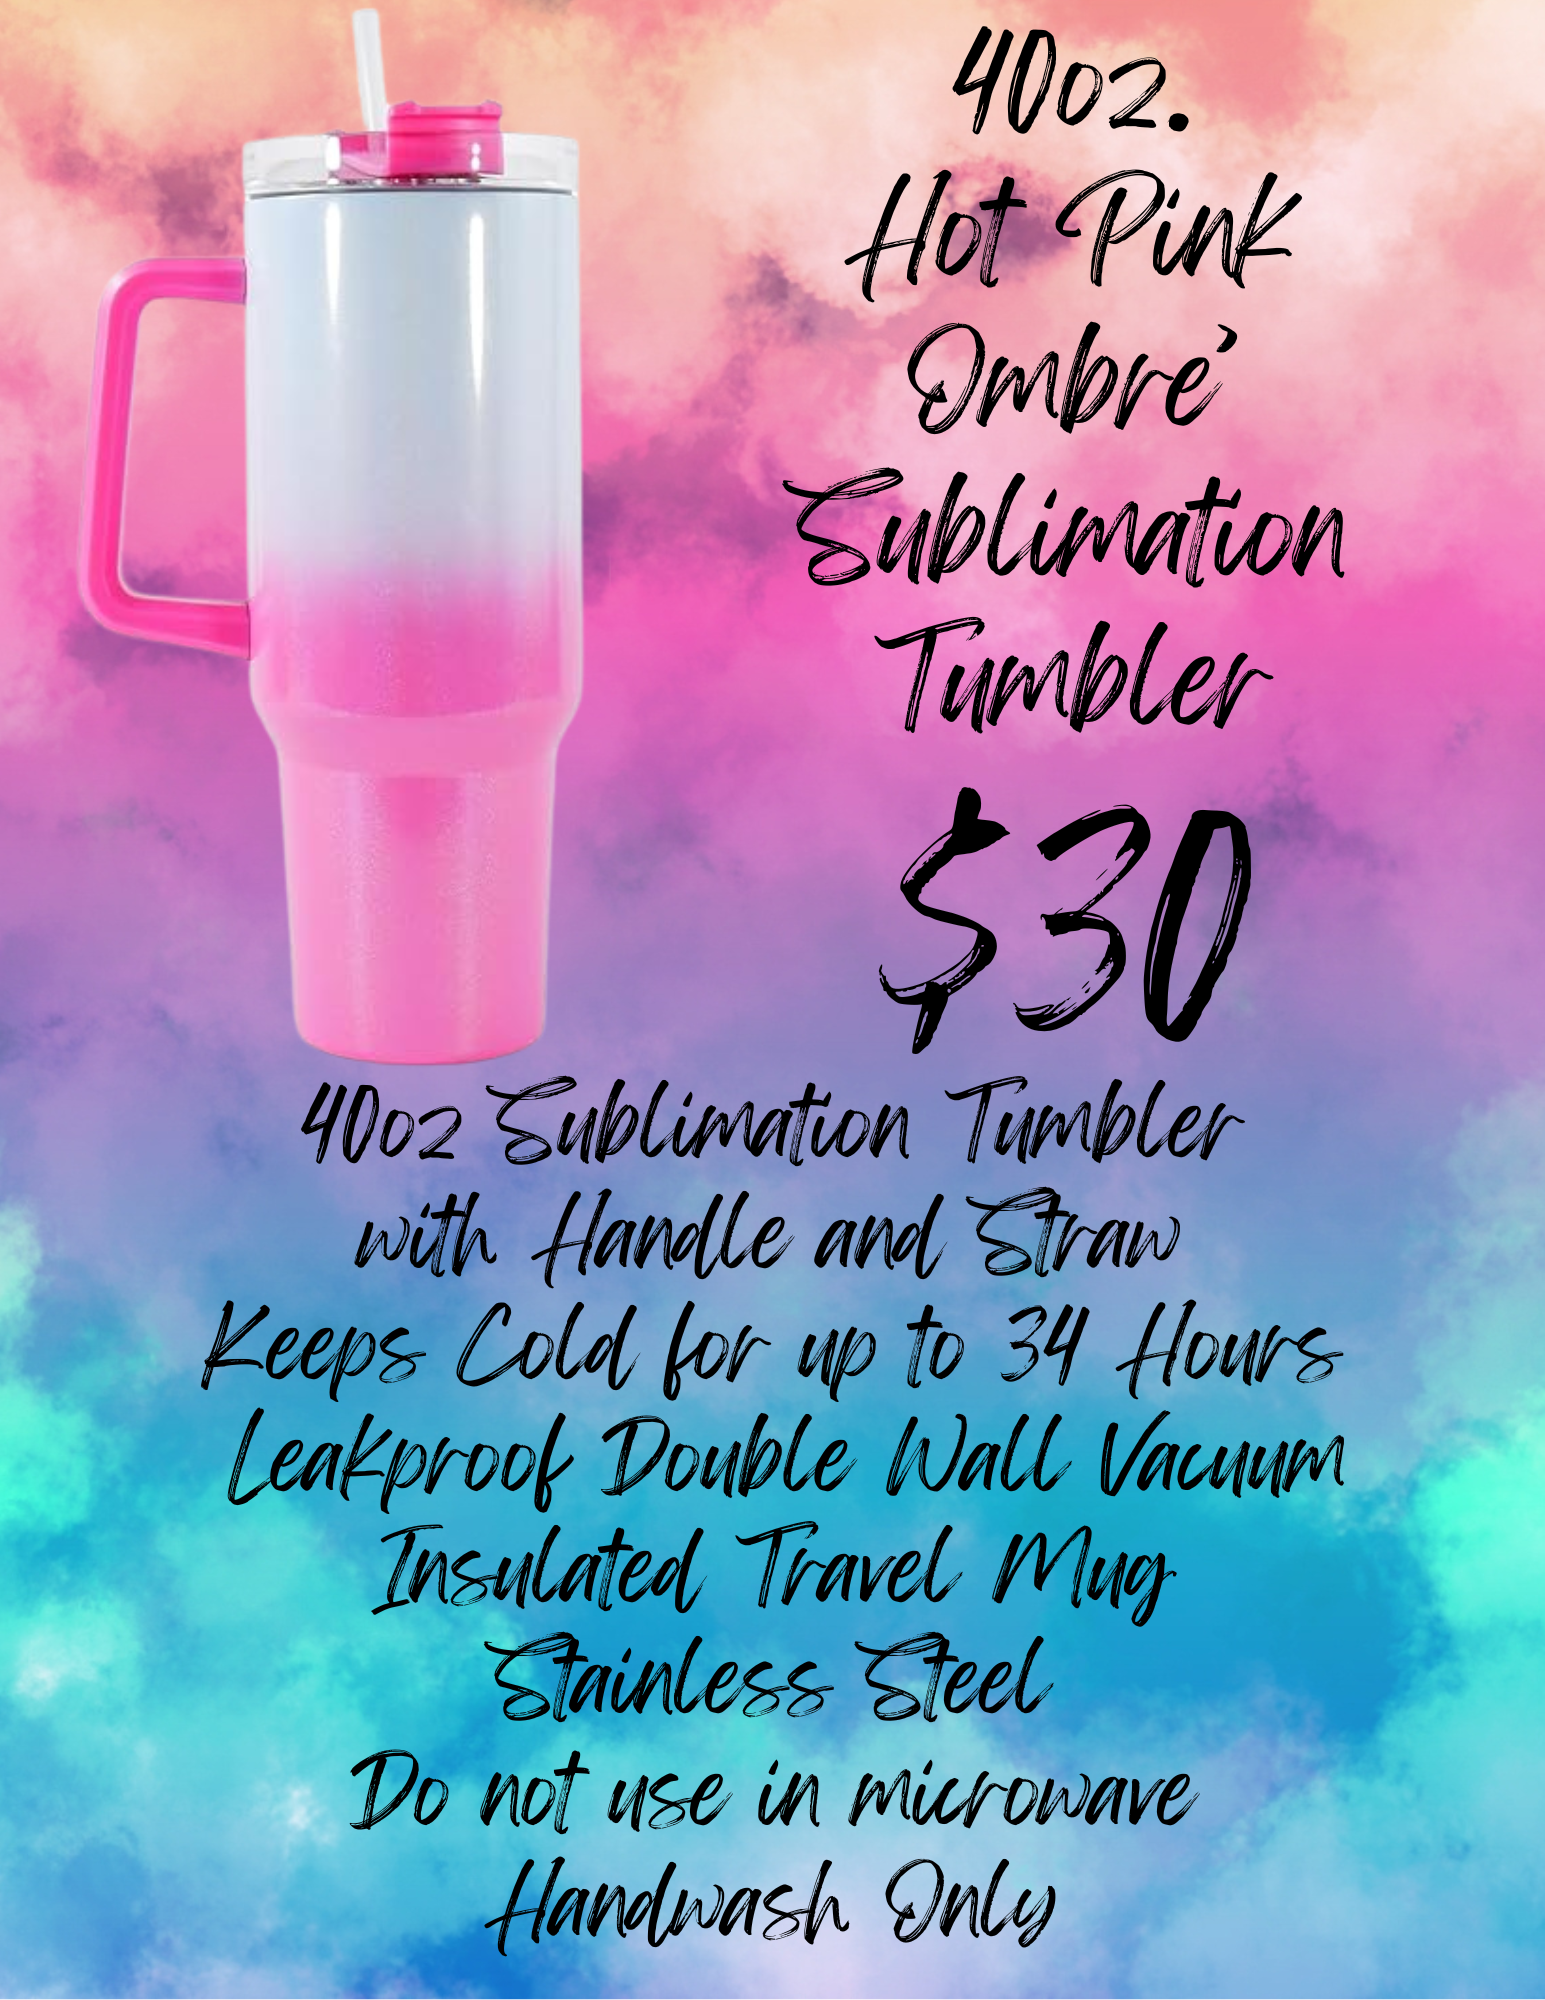 40oz Hot Pink Ombre' Tumbler (Sublimation)